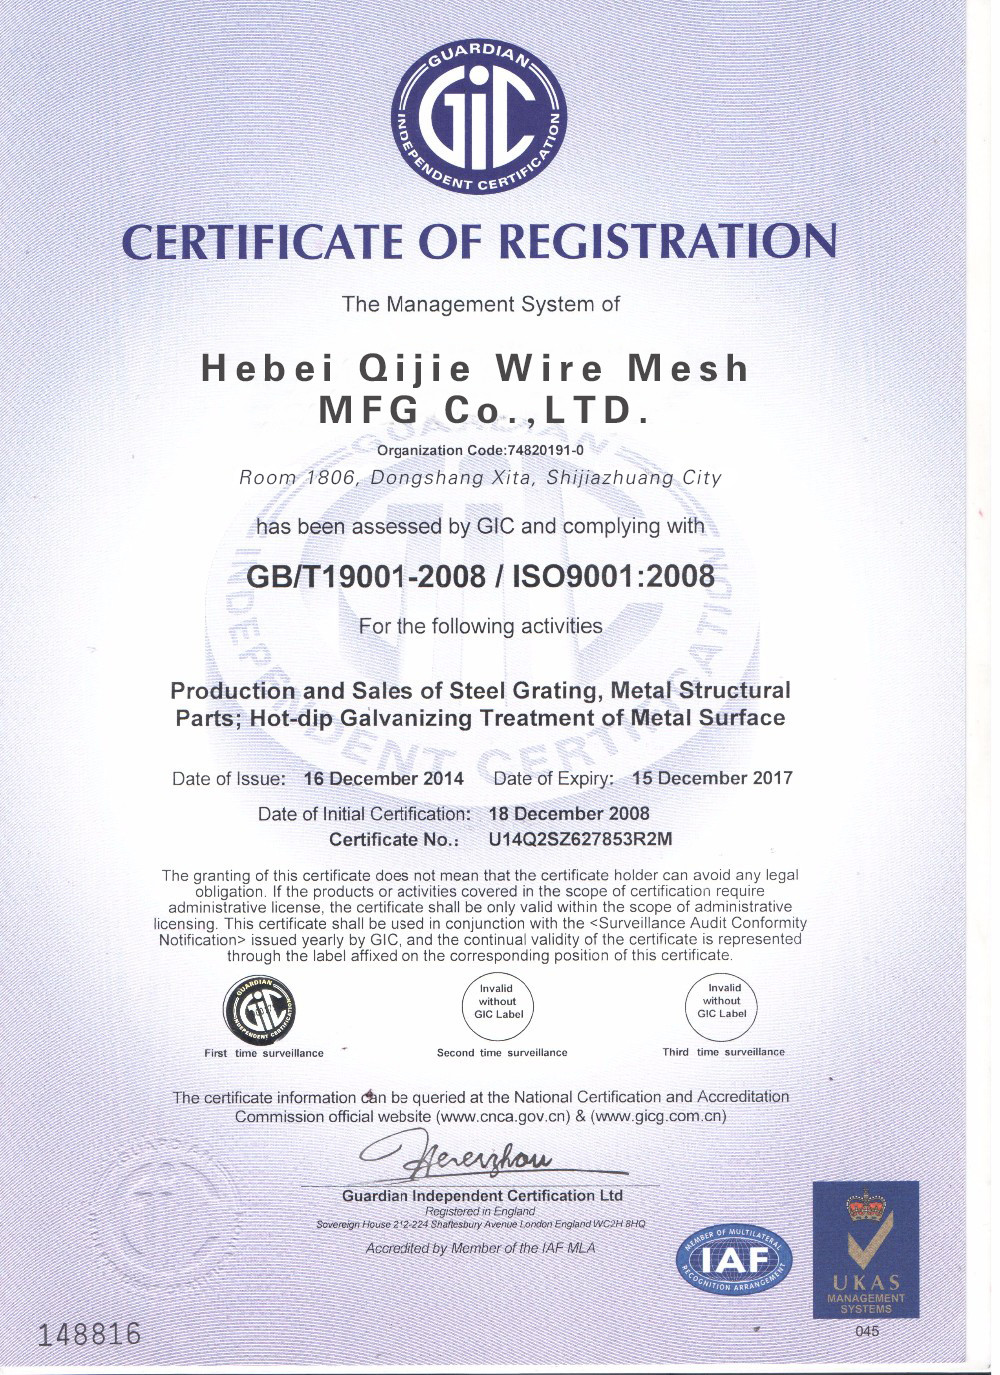 LA CHINE Hebei Qijie Wire Mesh MFG Co., Ltd Certifications